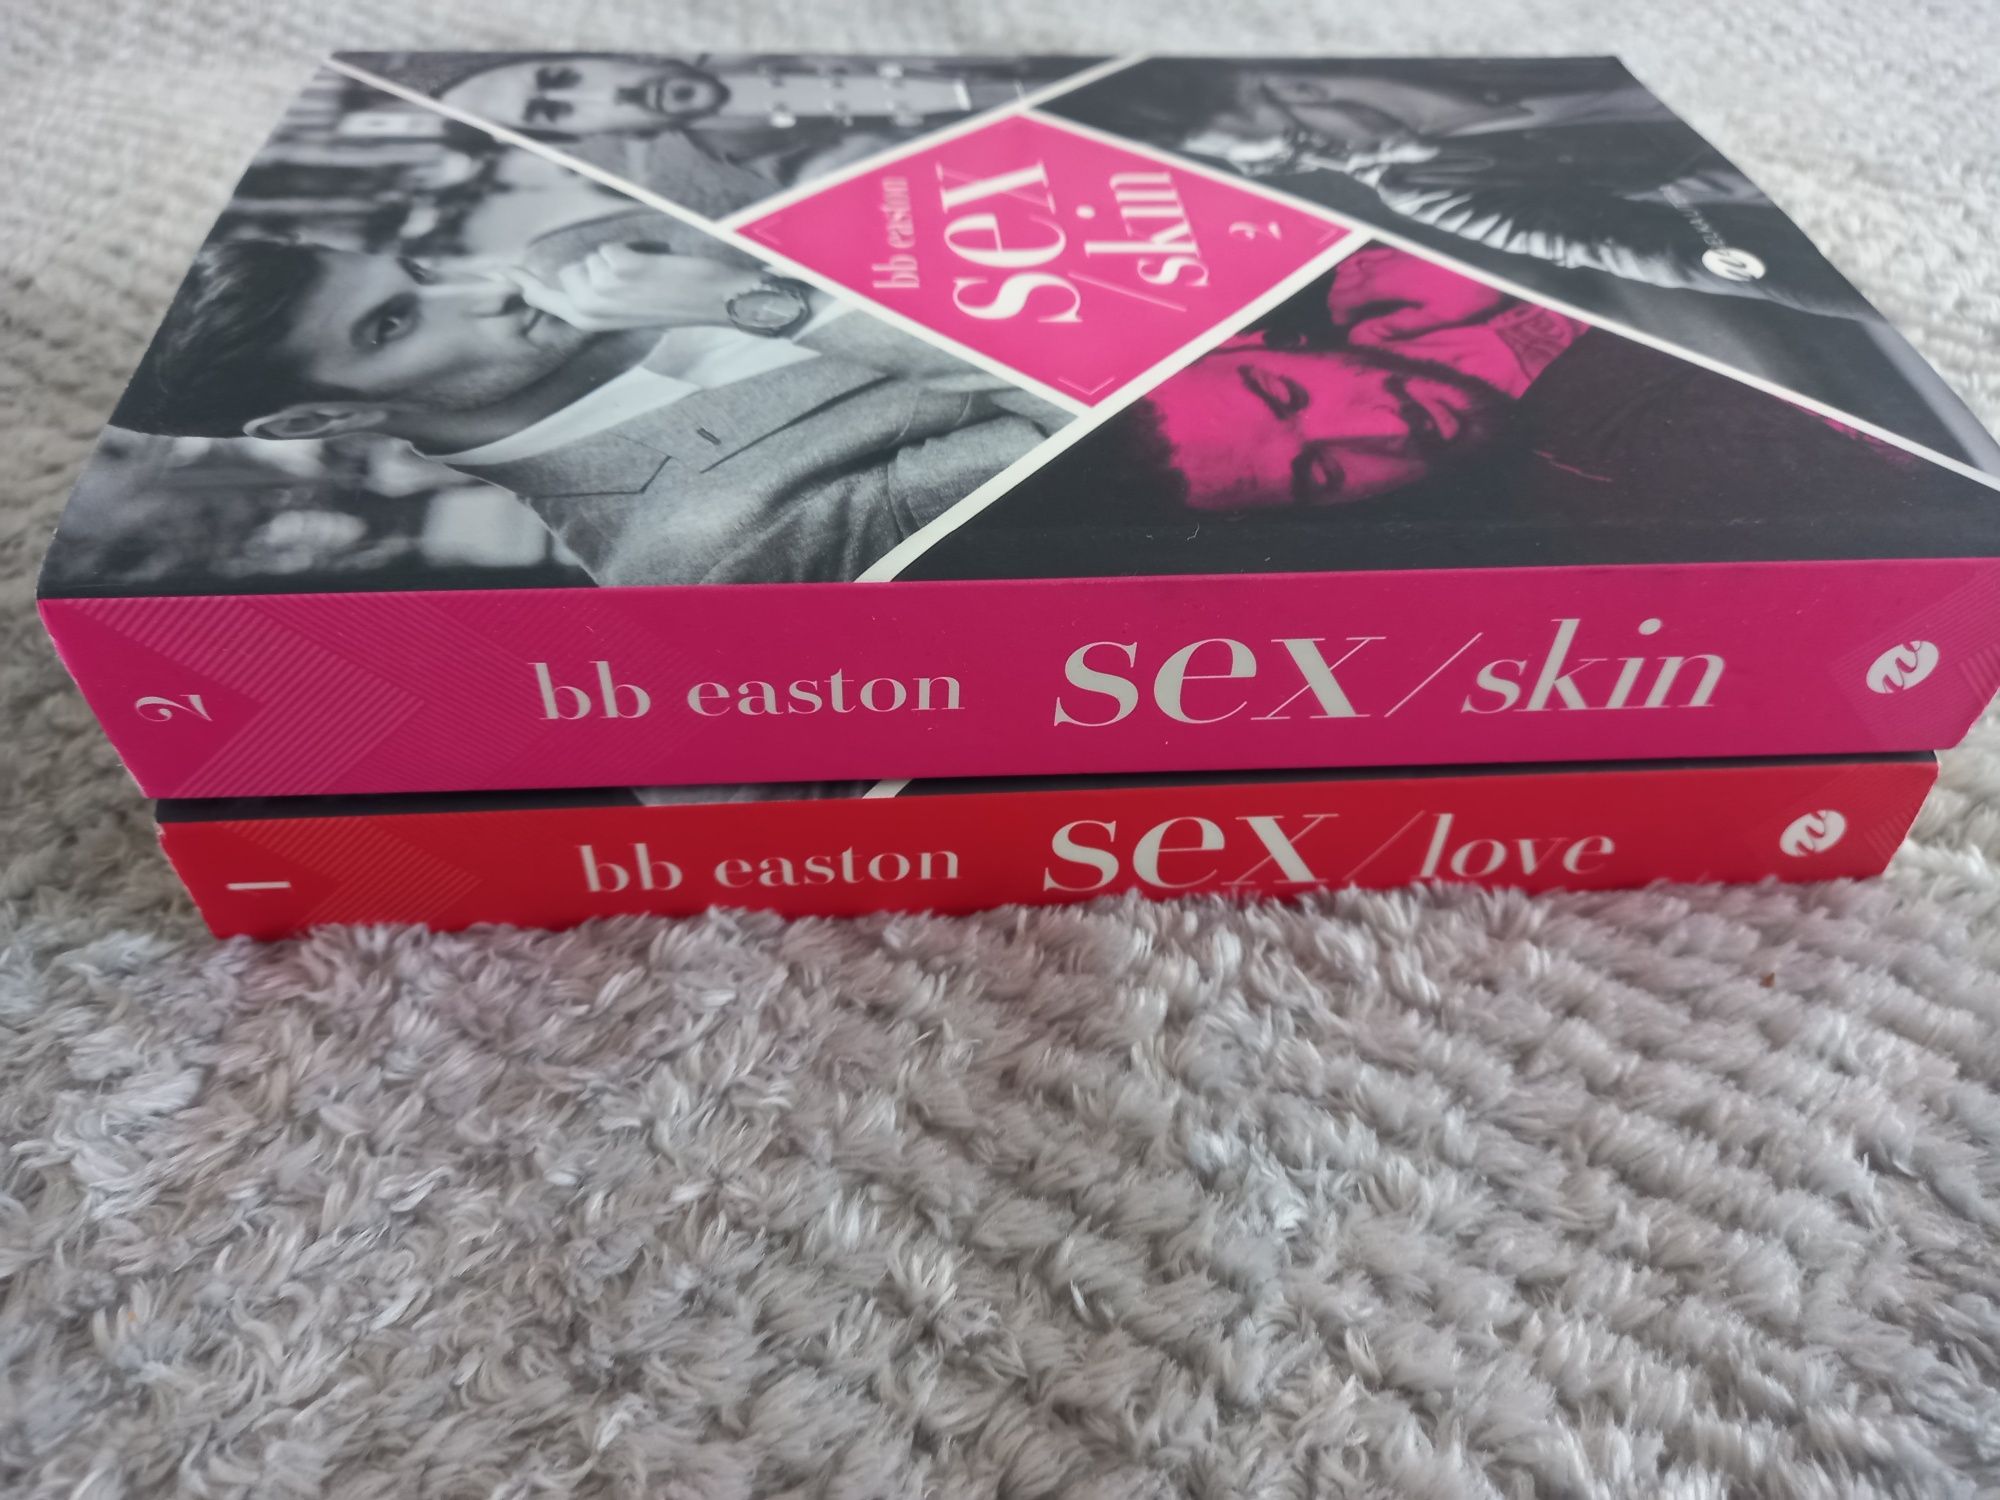 Bb easton - Sex/love + Sex/skin